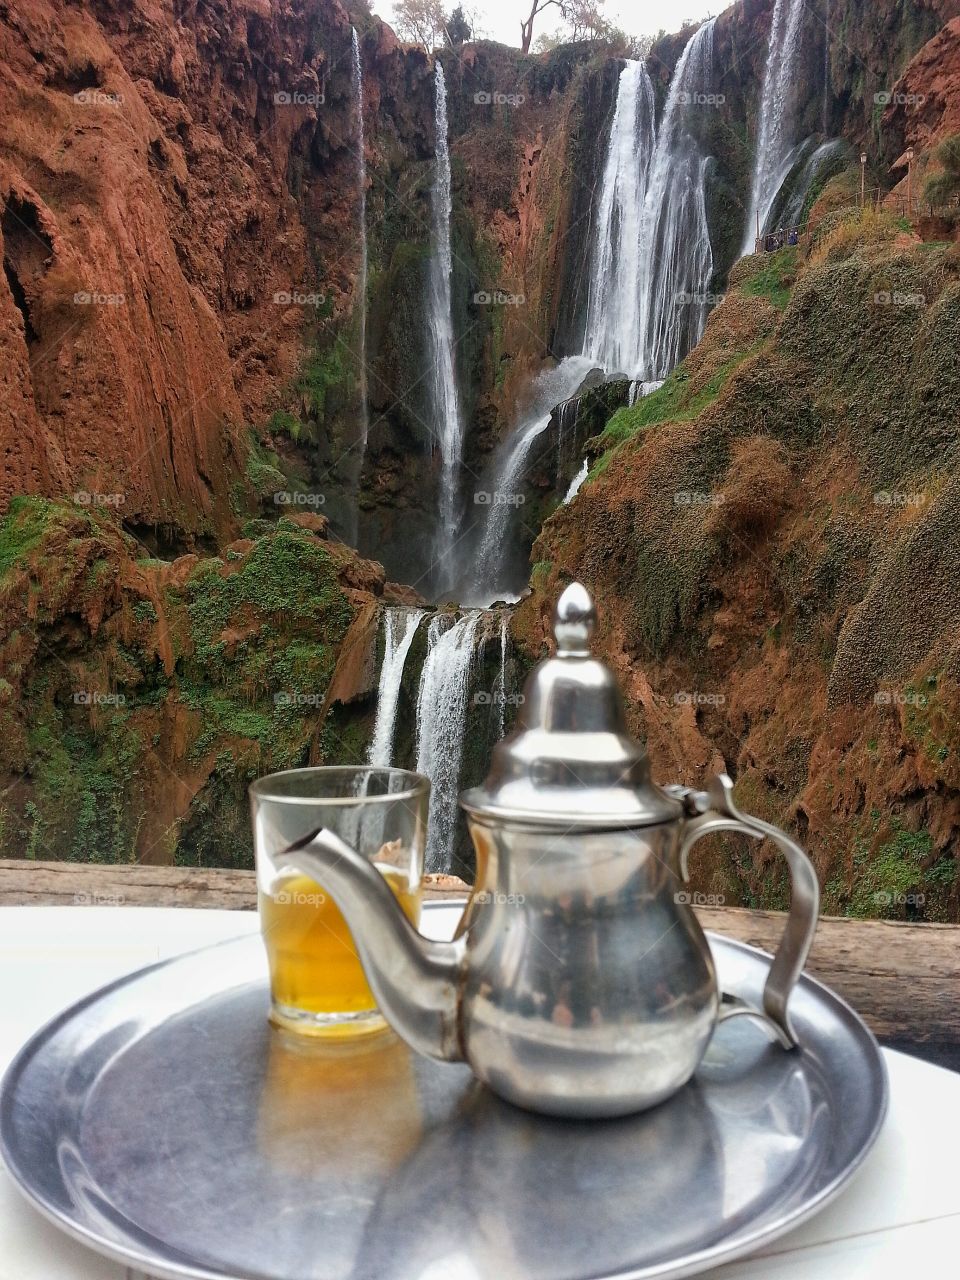 Tea time Moroccan style